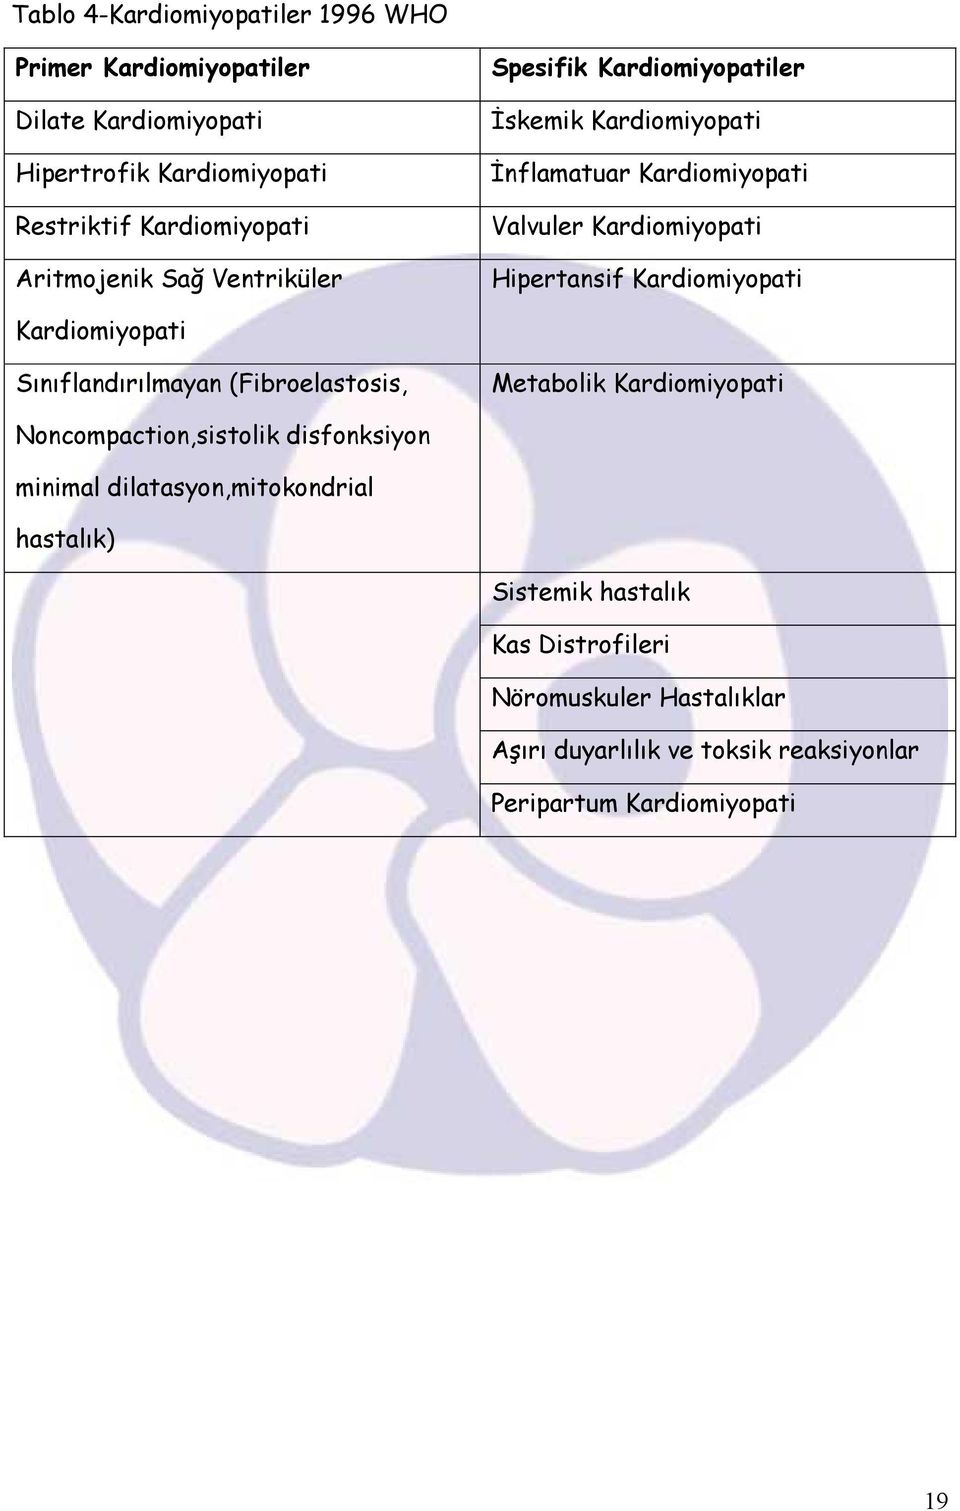 Kardiomiyopati Kardiomiyopati Sınıflandırılmayan (Fibroelastosis, Metabolik Kardiomiyopati Noncompaction,sistolik disfonksiyon minimal